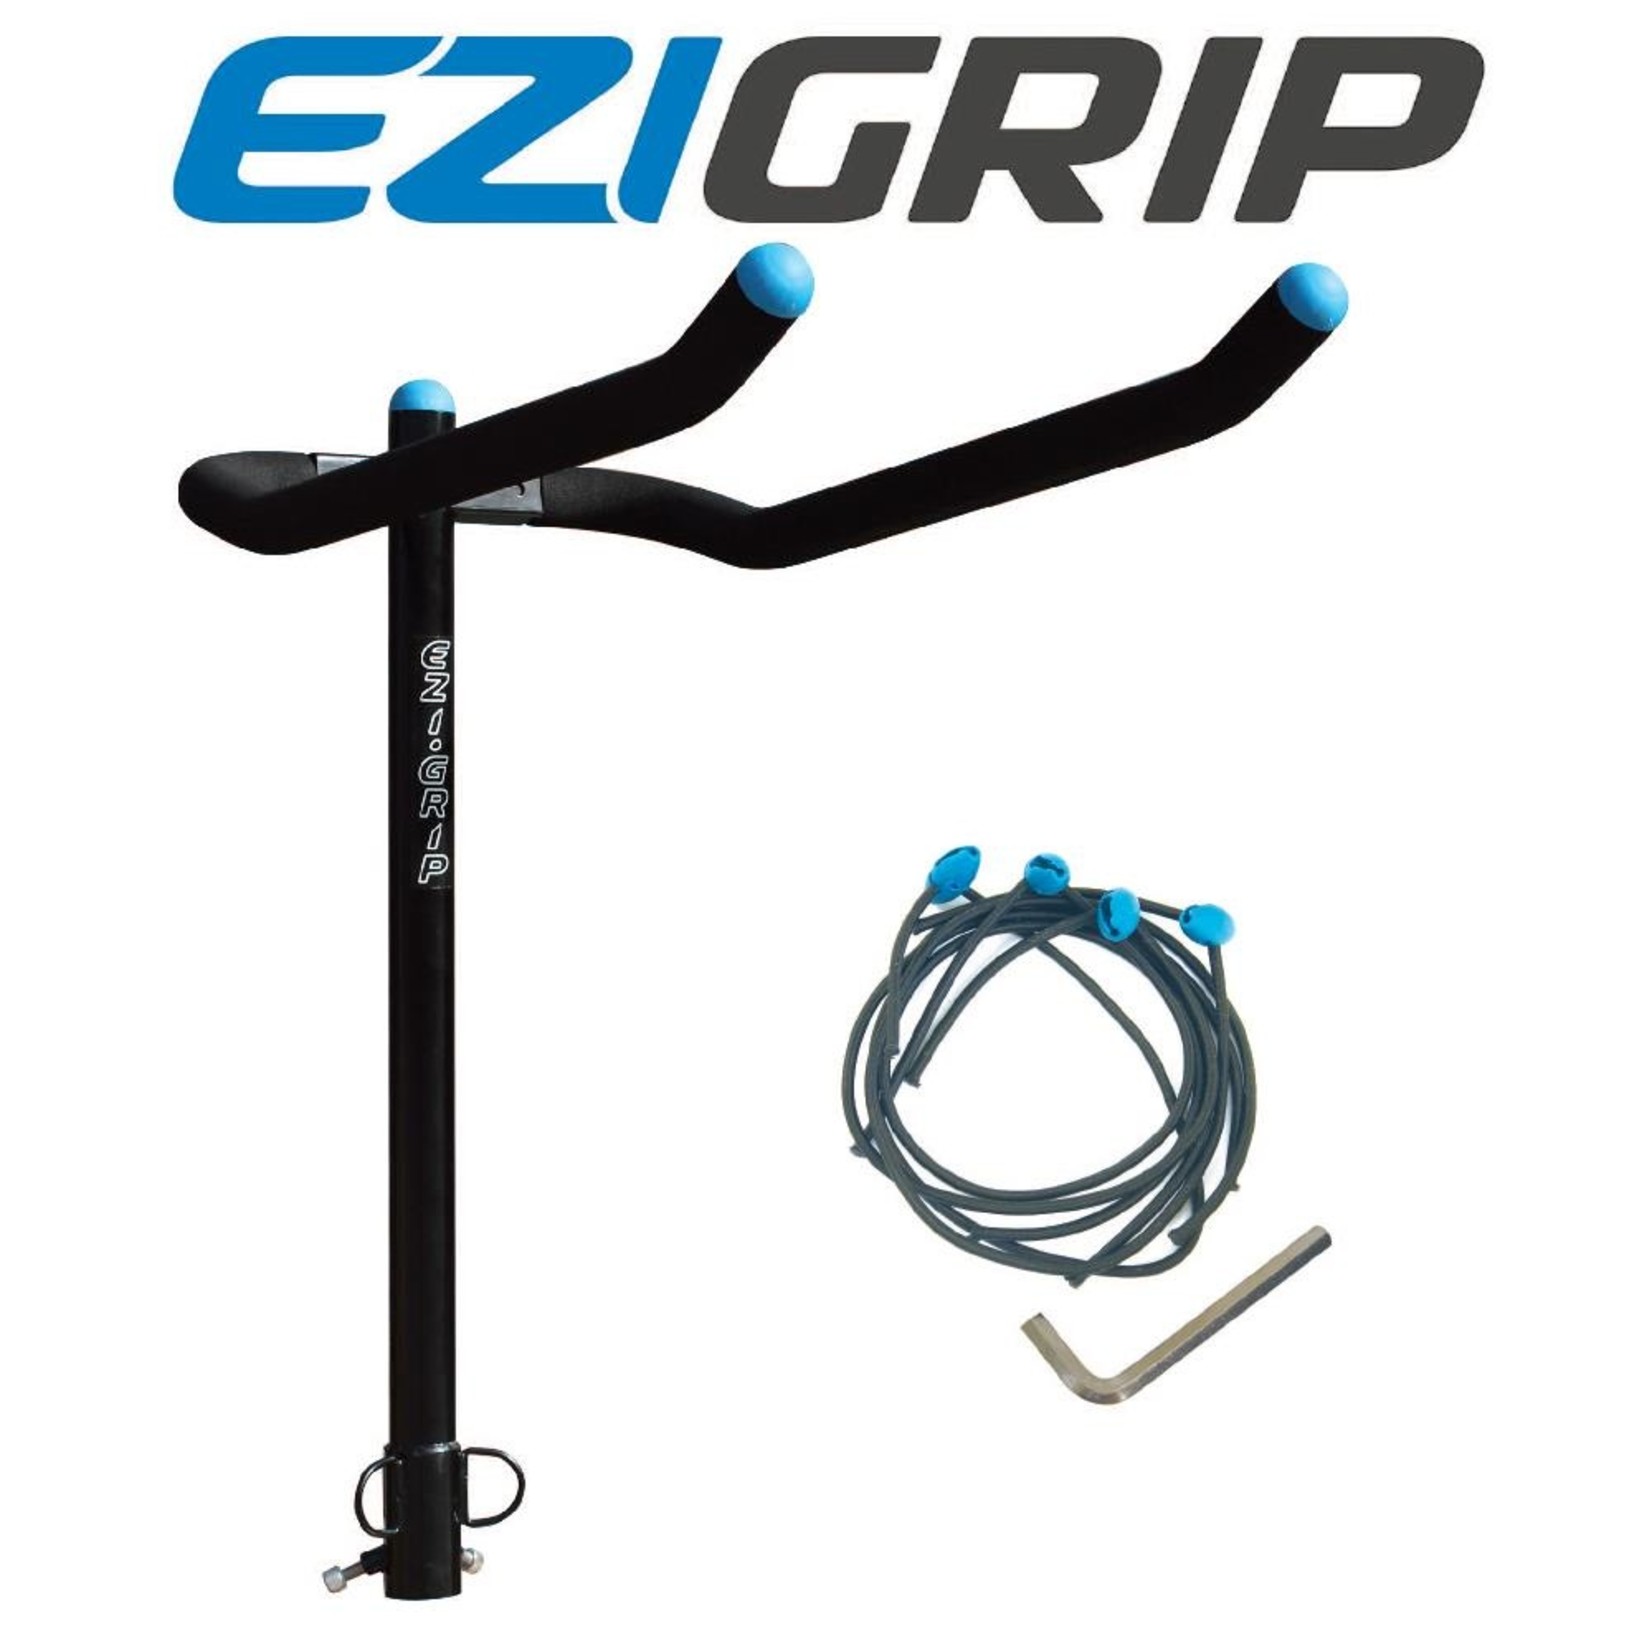 Ezi Grip EziGrip Twin Arm Towball 4 Bike Mounted Rack - Carries up to 4 Bikes